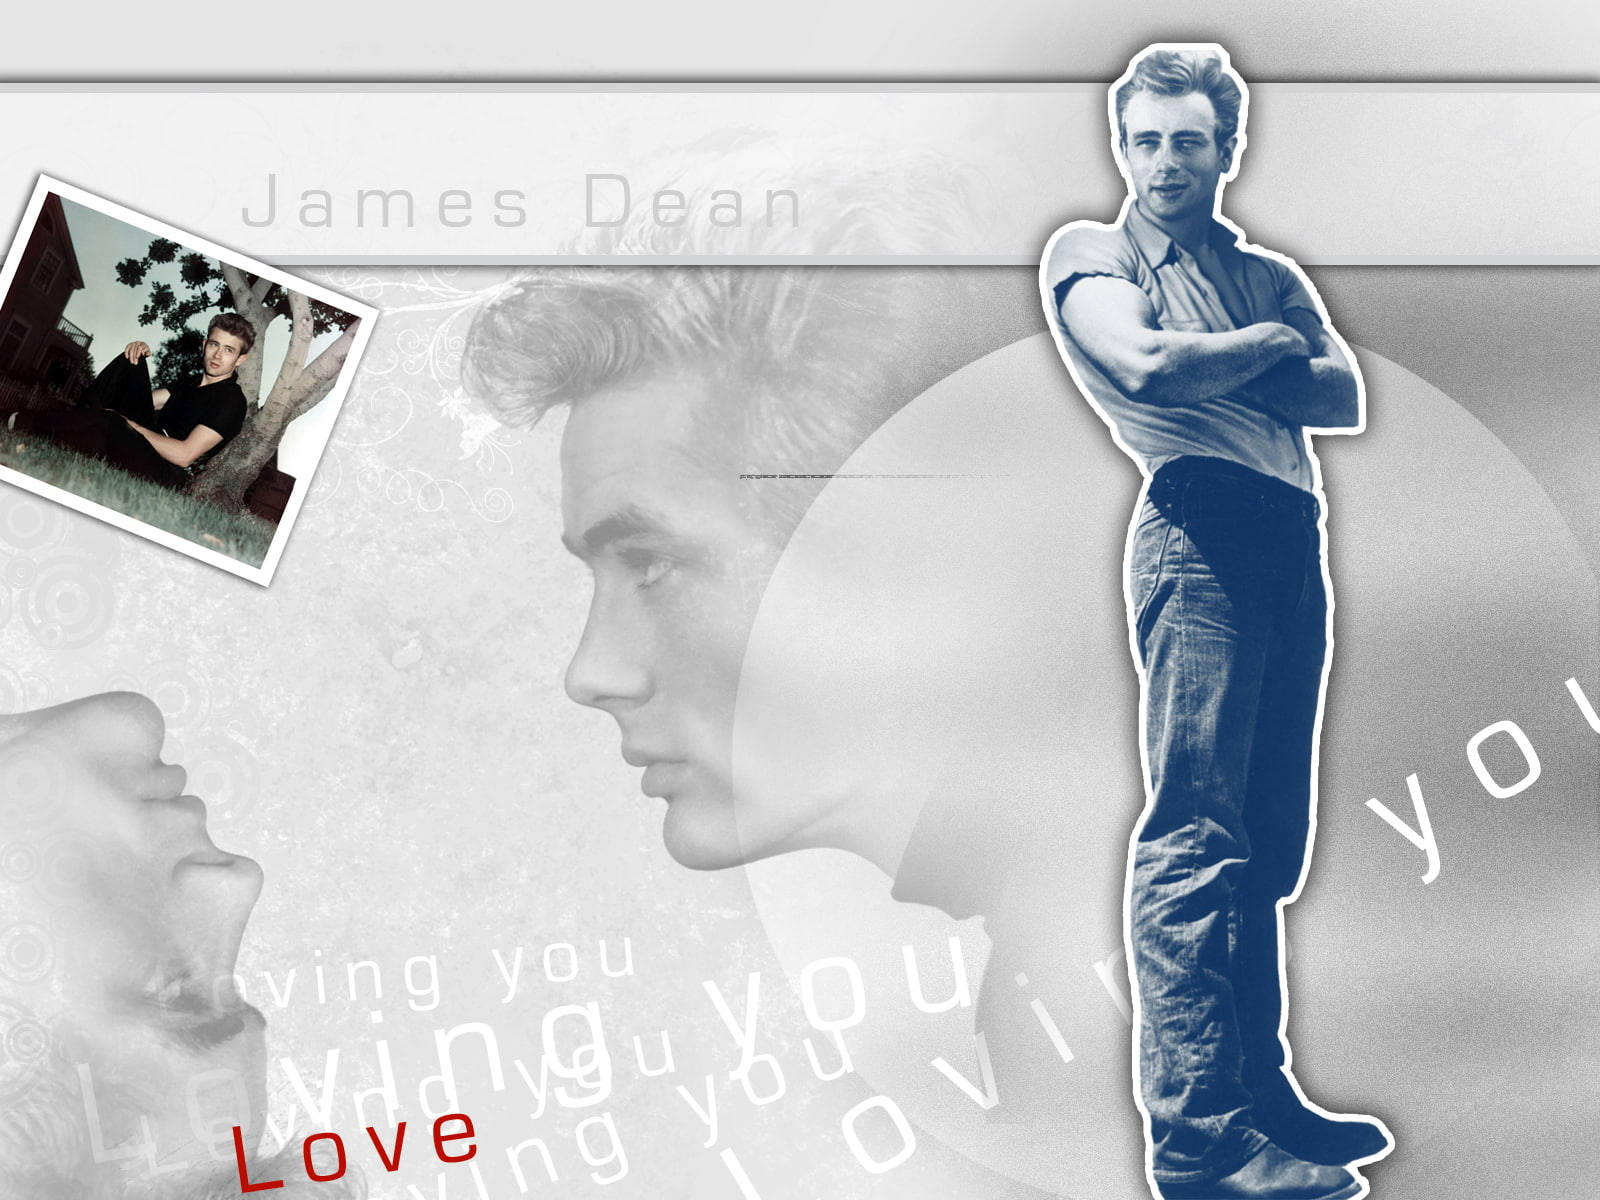 James Dean Loving You Background